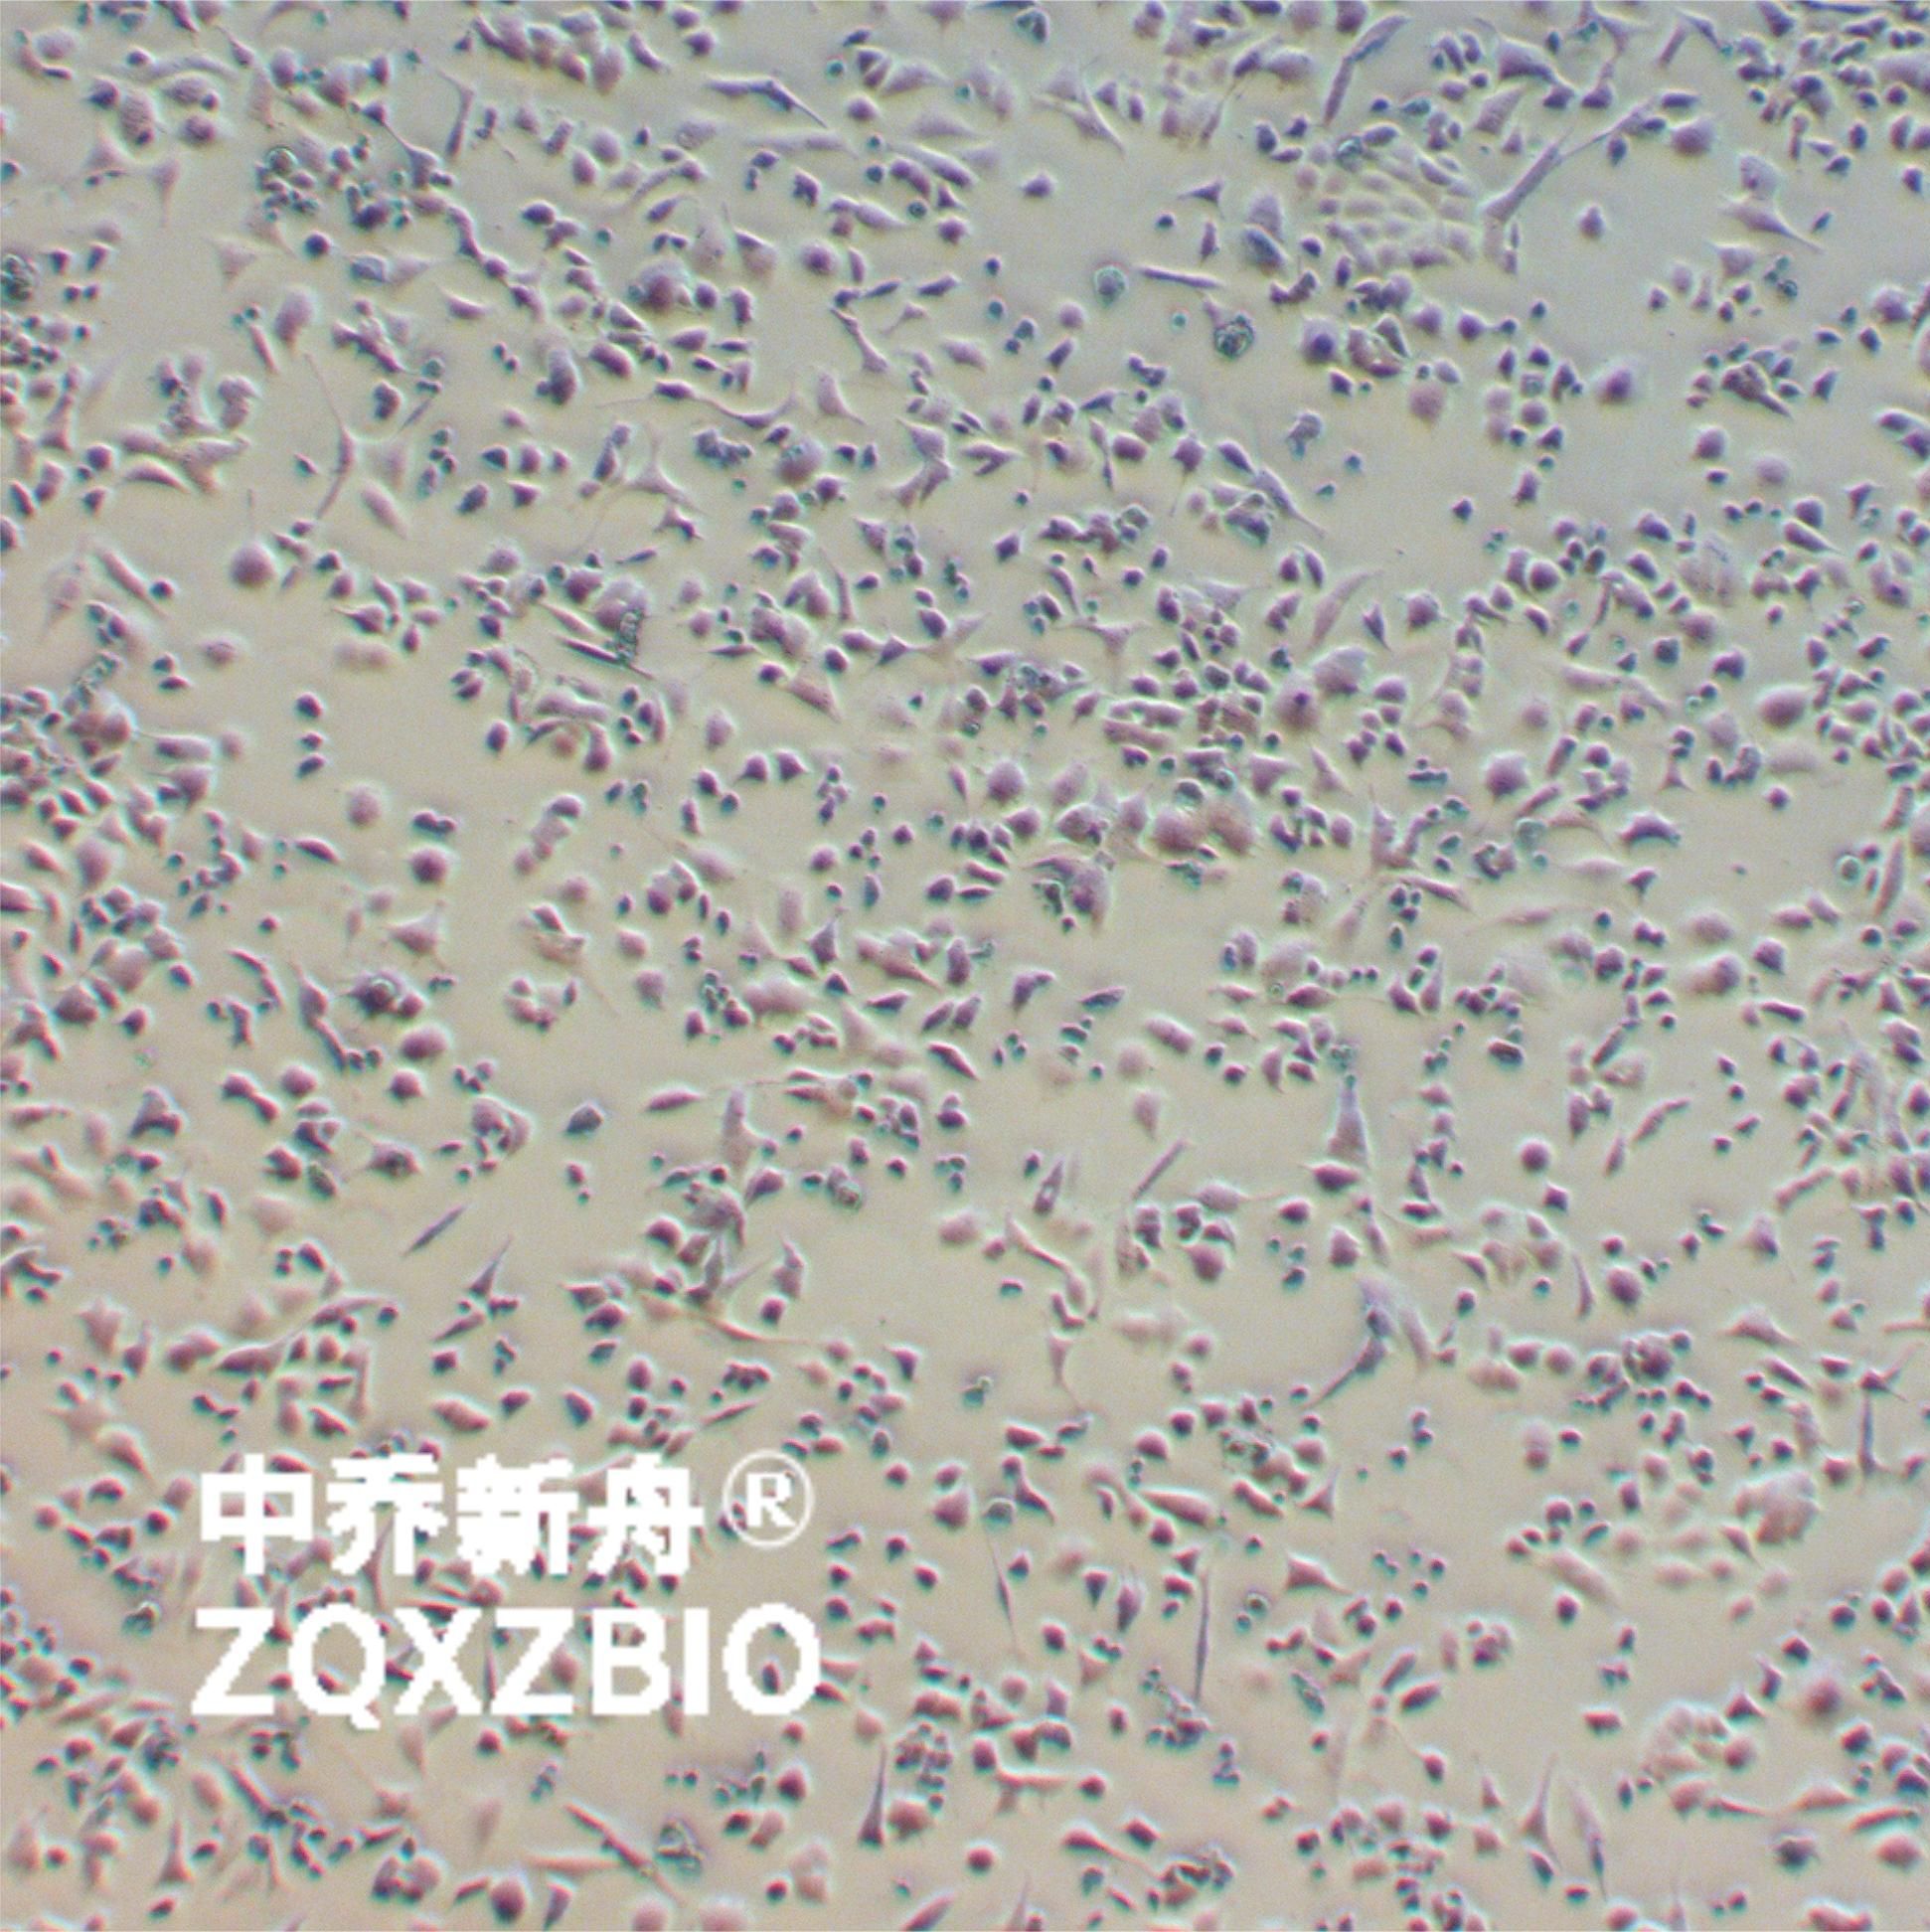 PC-12(低分化)大鼠肾上腺嗜铬细胞瘤细胞(低分化)